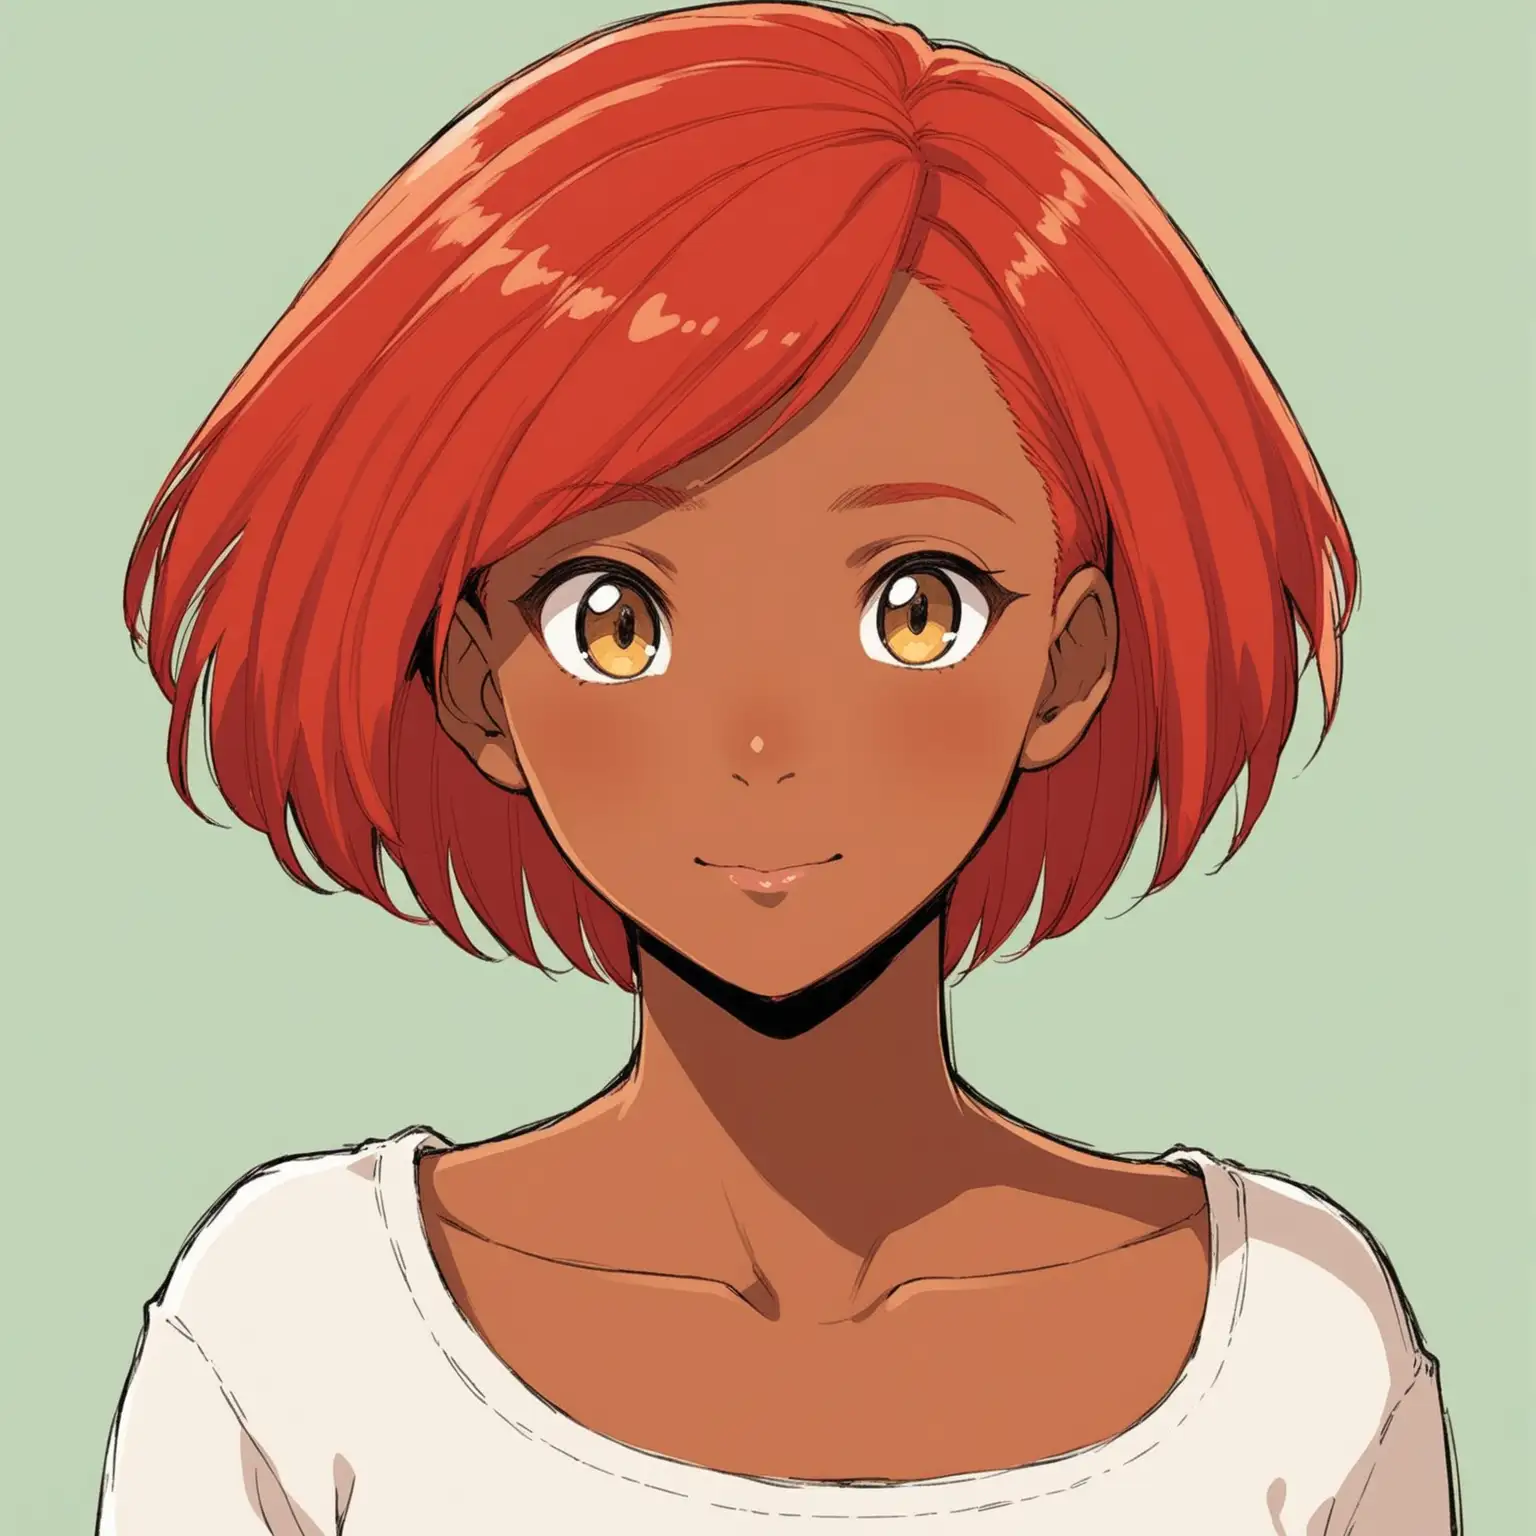 Ghibli Style BlackSkinned Female with Shaved Red Hair